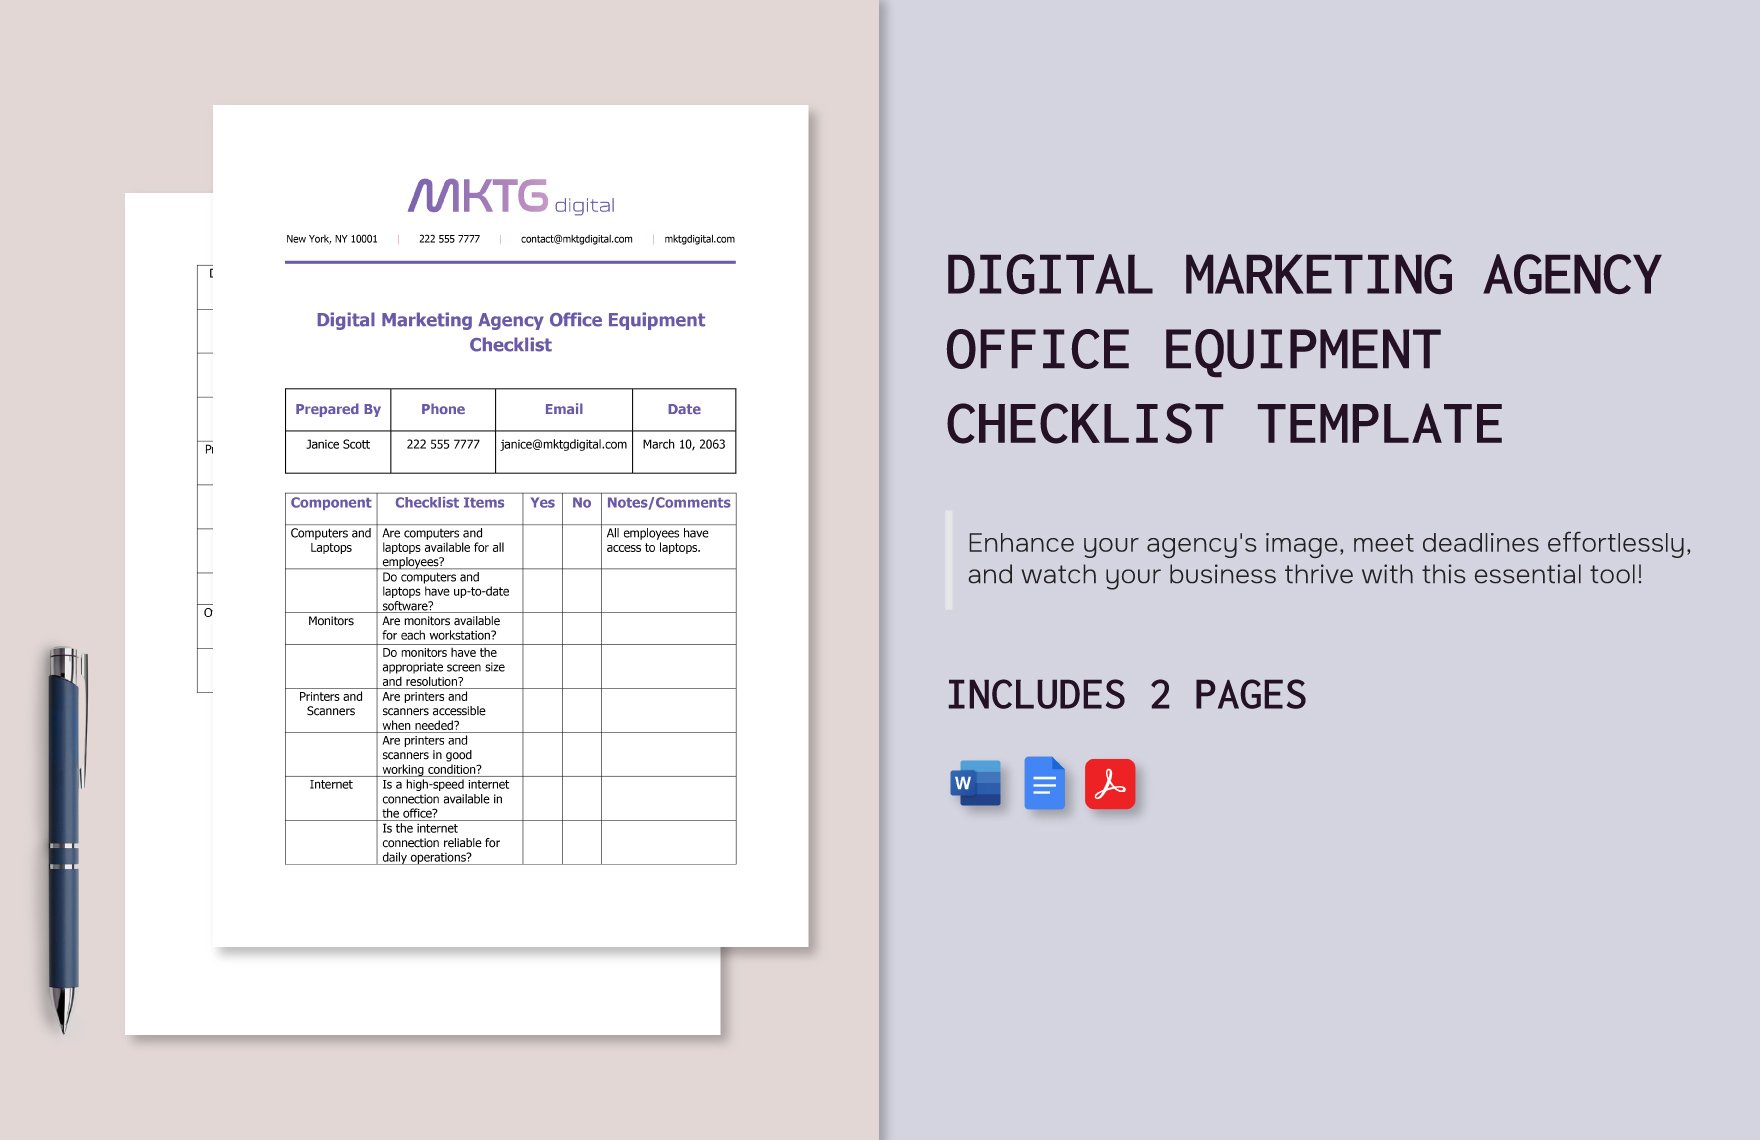 Digital Marketing Agency Office Equipment Checklist Template